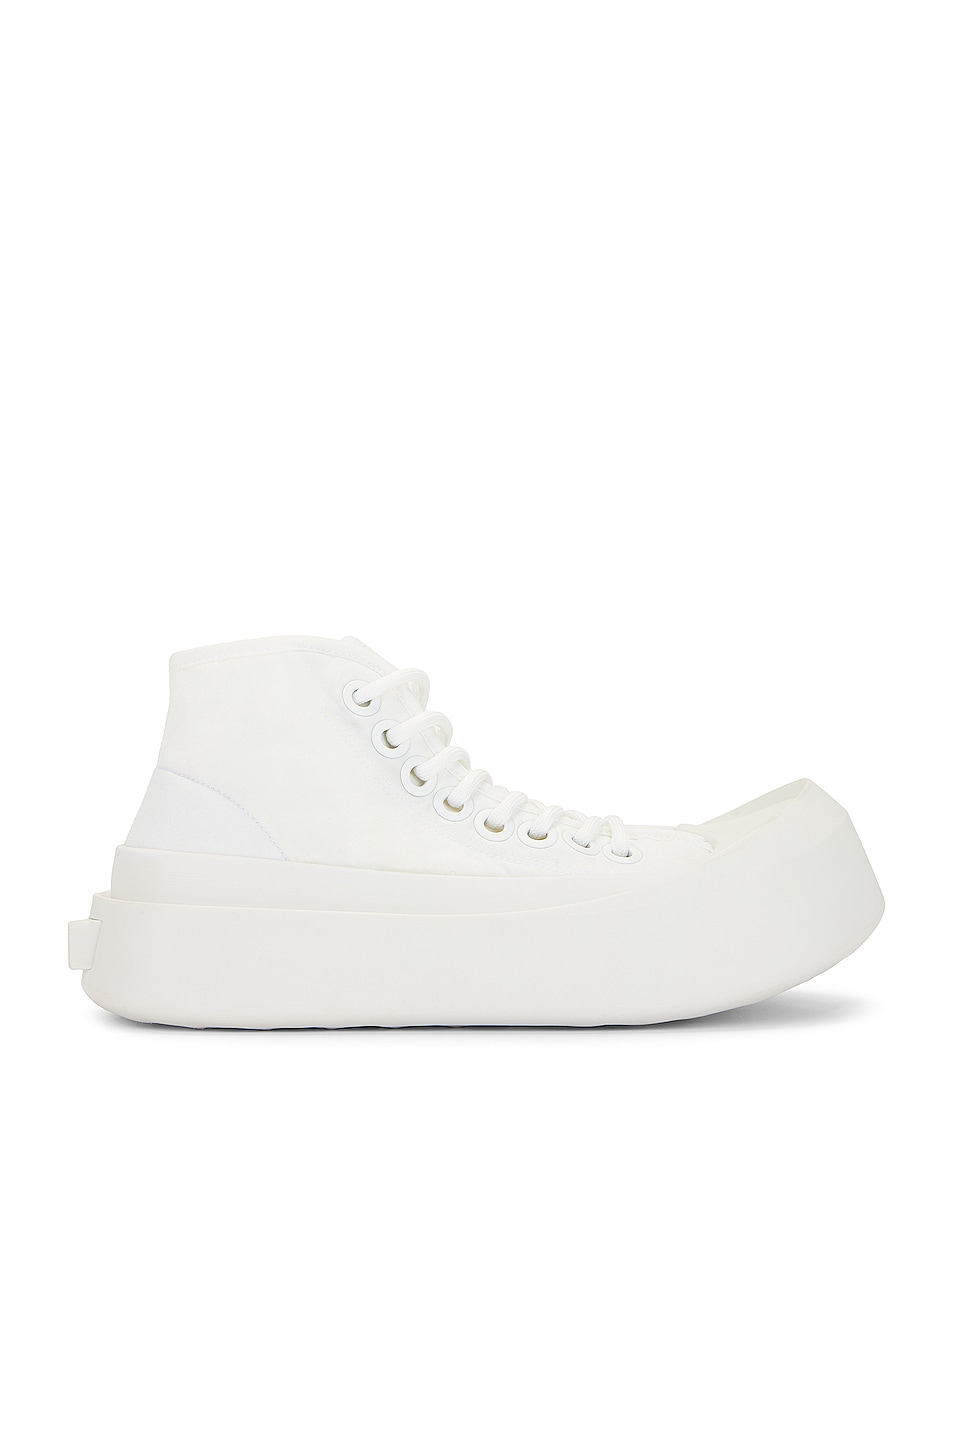 Bottega Veneta Jumbo High Top Sneaker in Optic White | FWRD